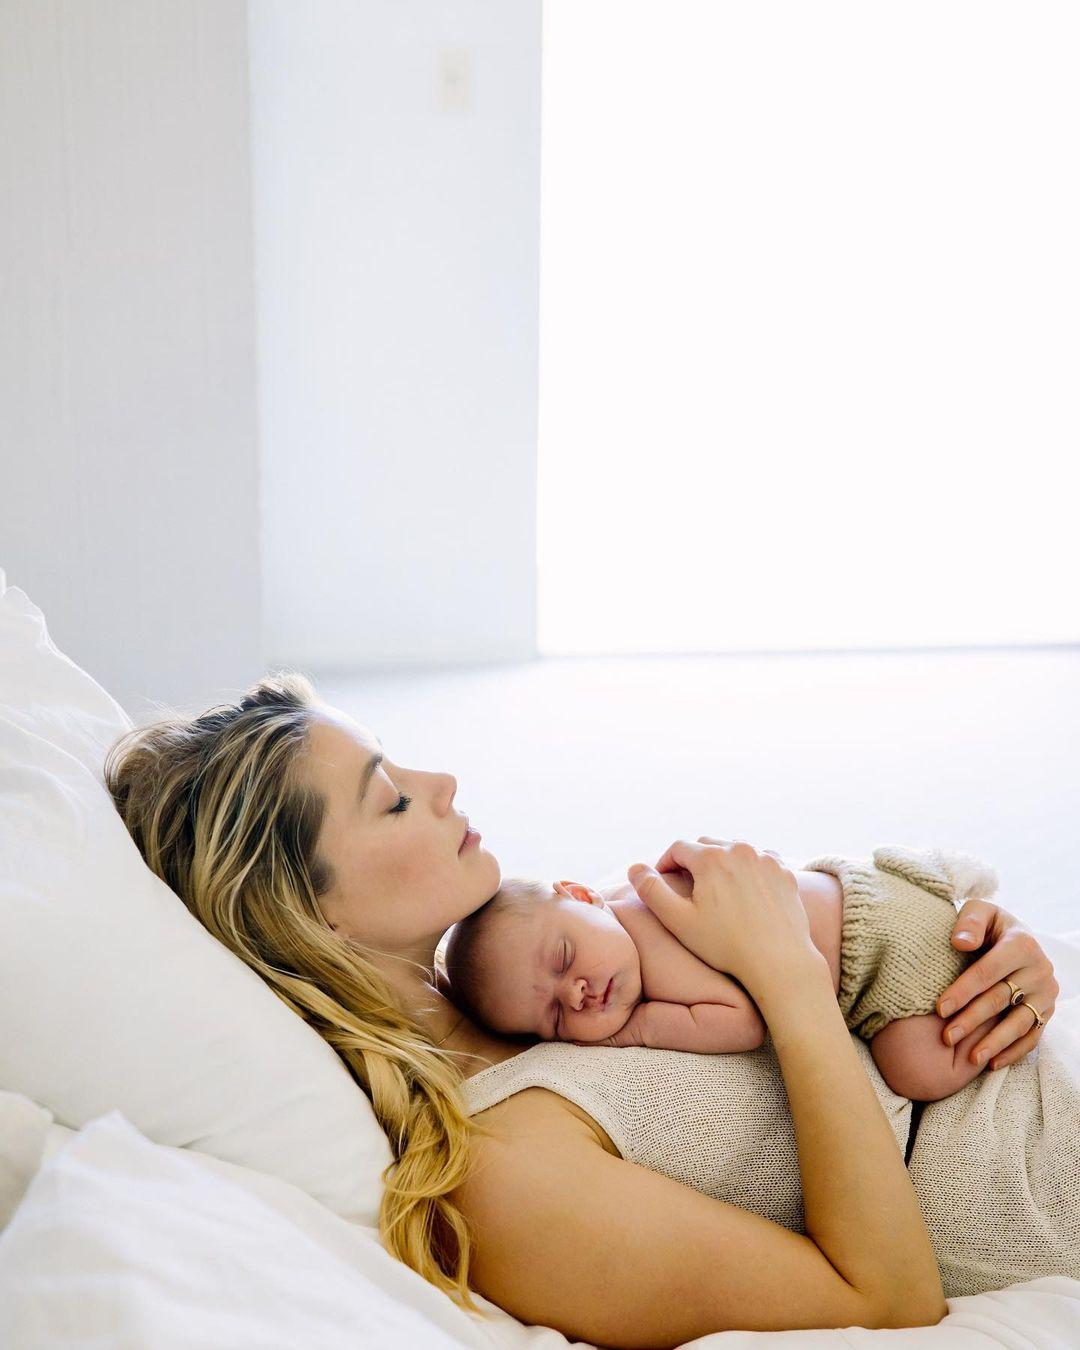 Amber Heard Secretly Welcomes Newborn Baby